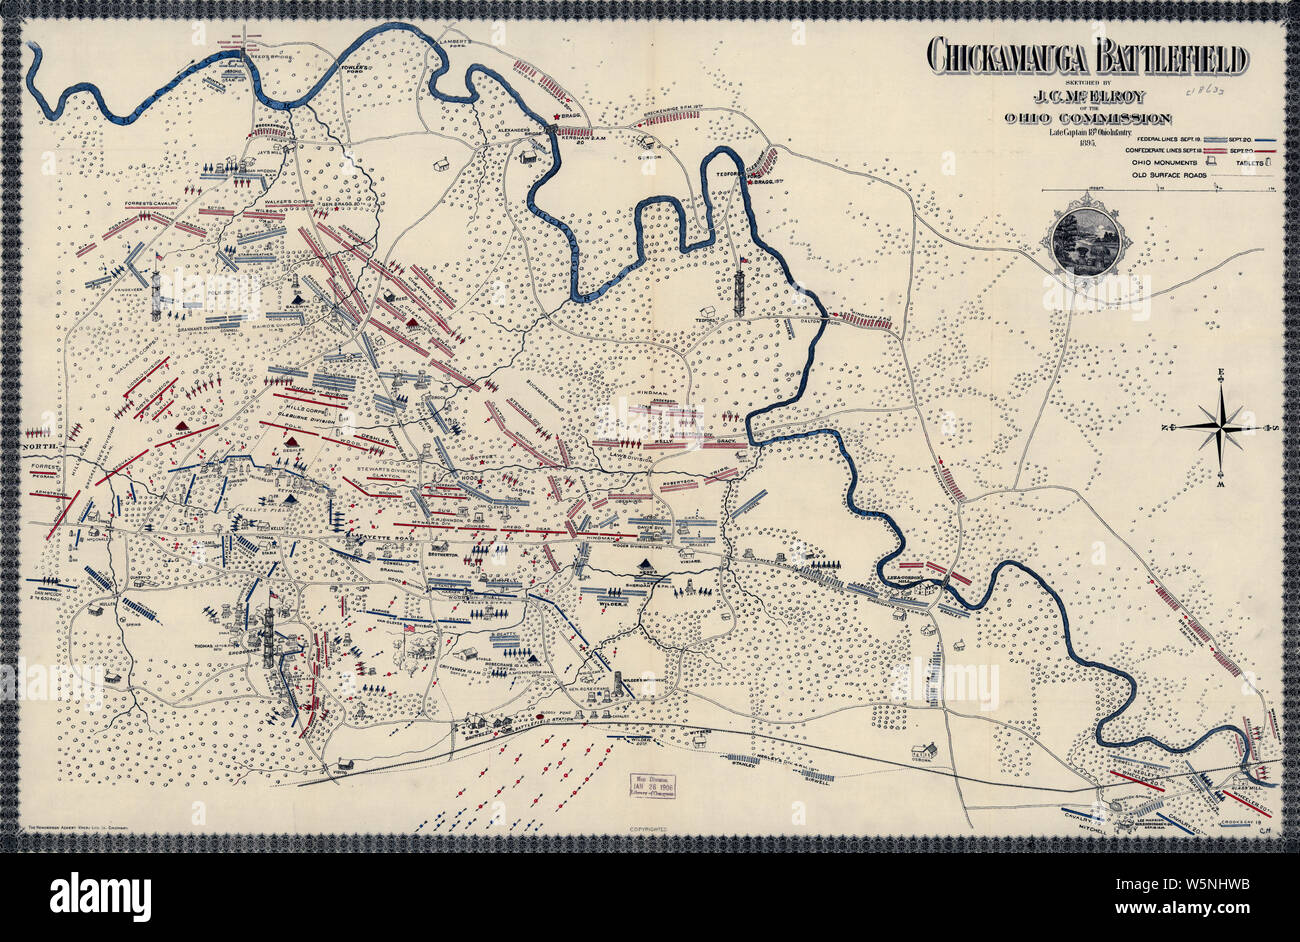 Civil War Maps 0276 Chickamauga battlefield Accompanies The battle of Chickamauga Historical map and guide book Rebuild and Repair Stock Photo